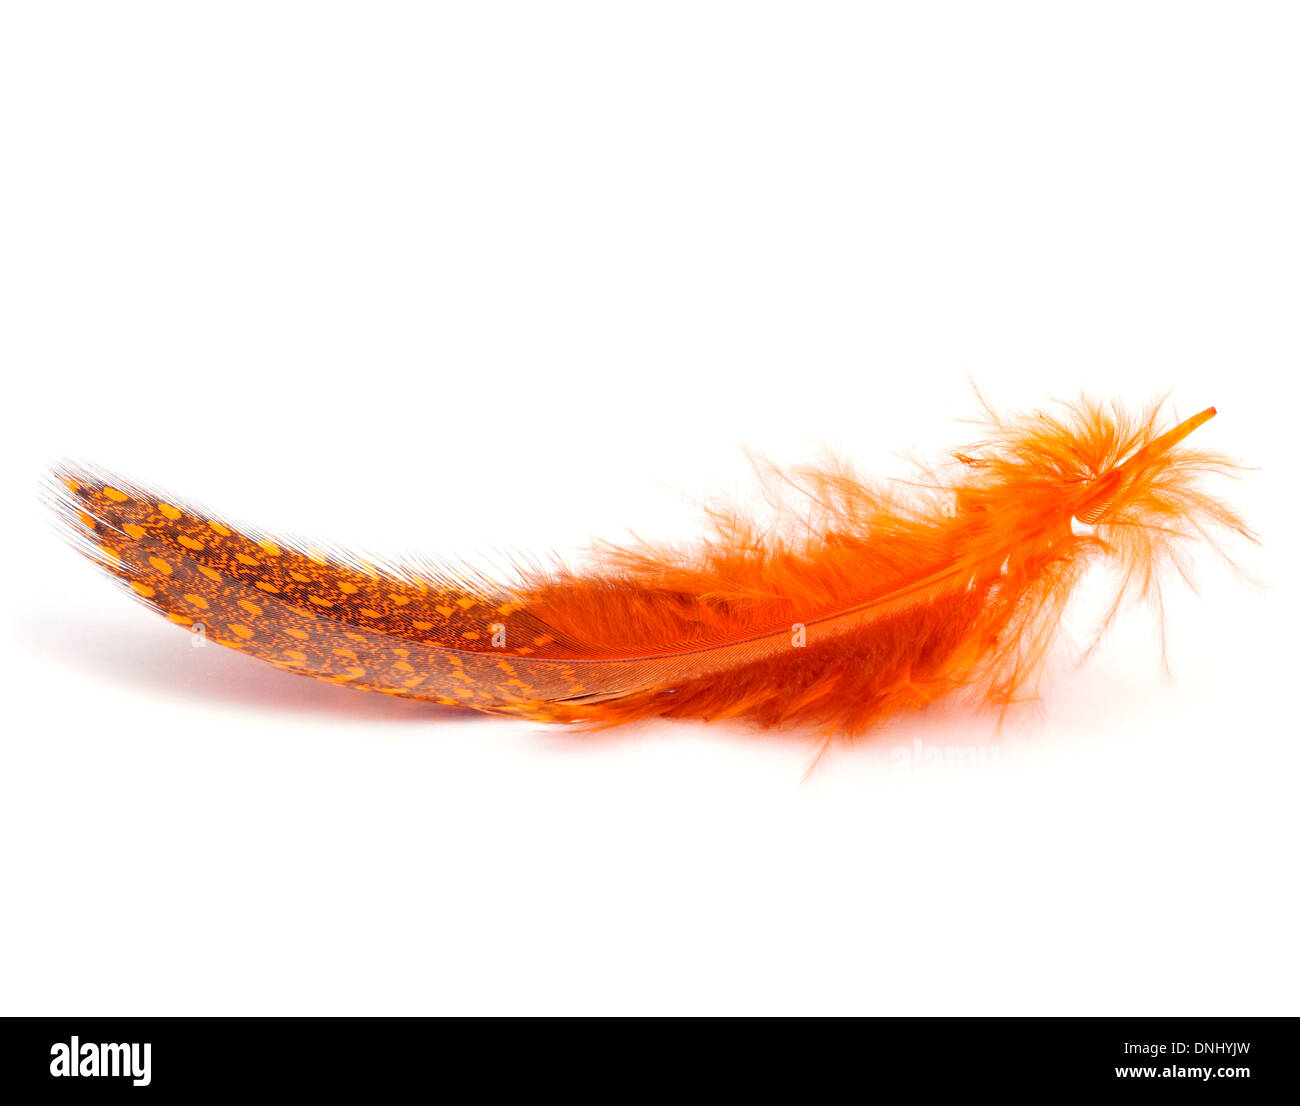 an orange feather on a white background Stock Photo